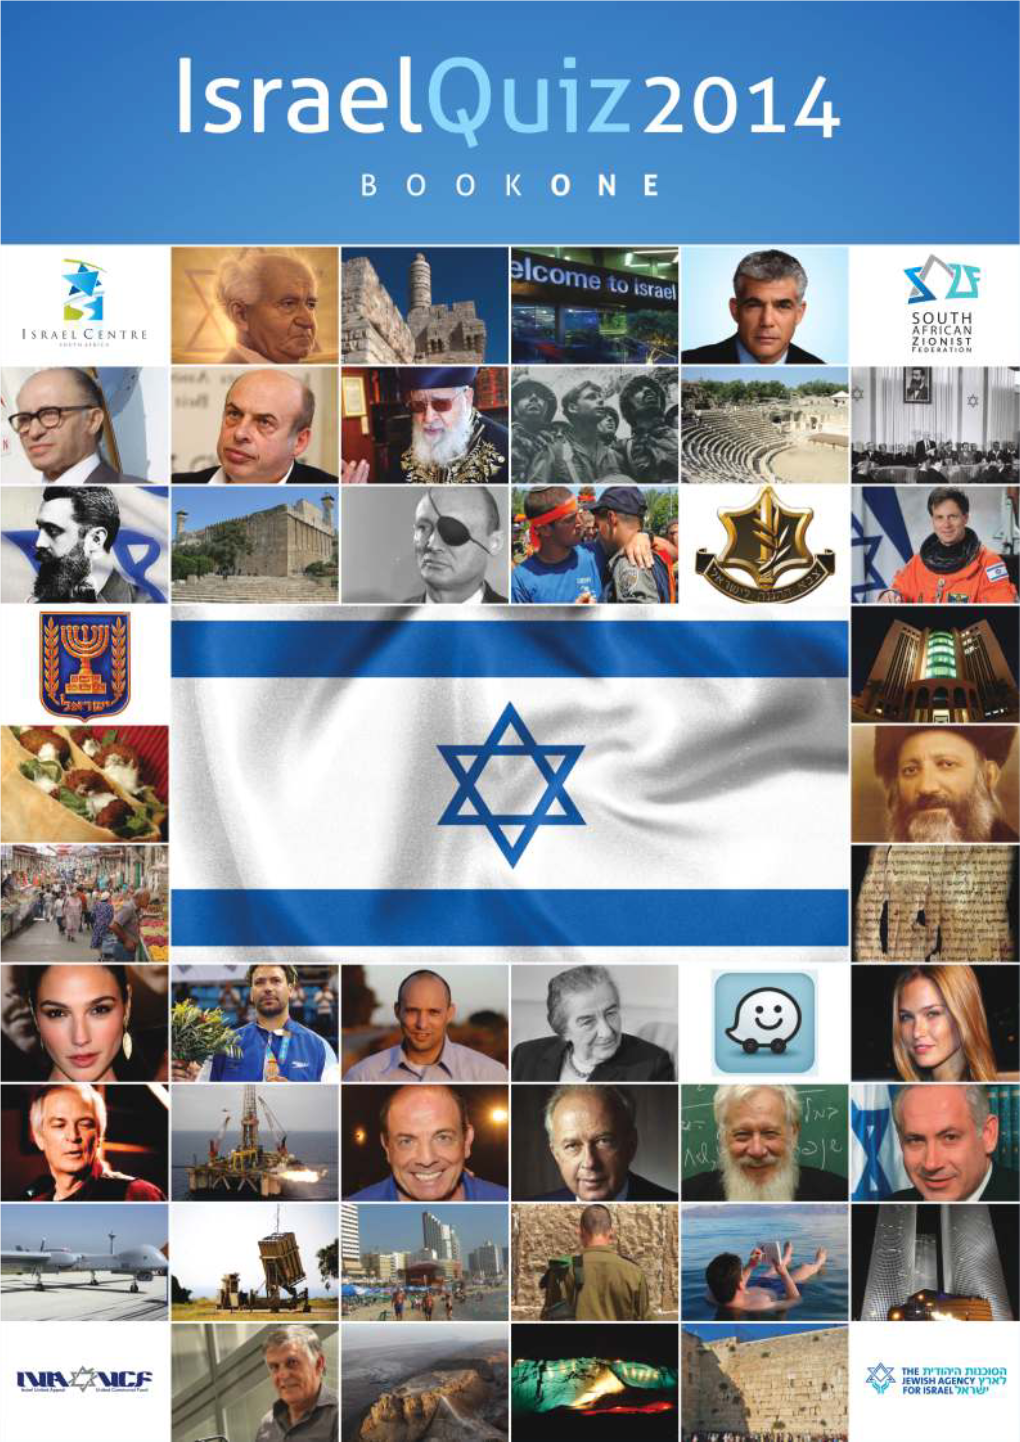 Israel Quiz 2014 Book One ALL X79 Plus Cover 297X210 5Mar2014 PR3